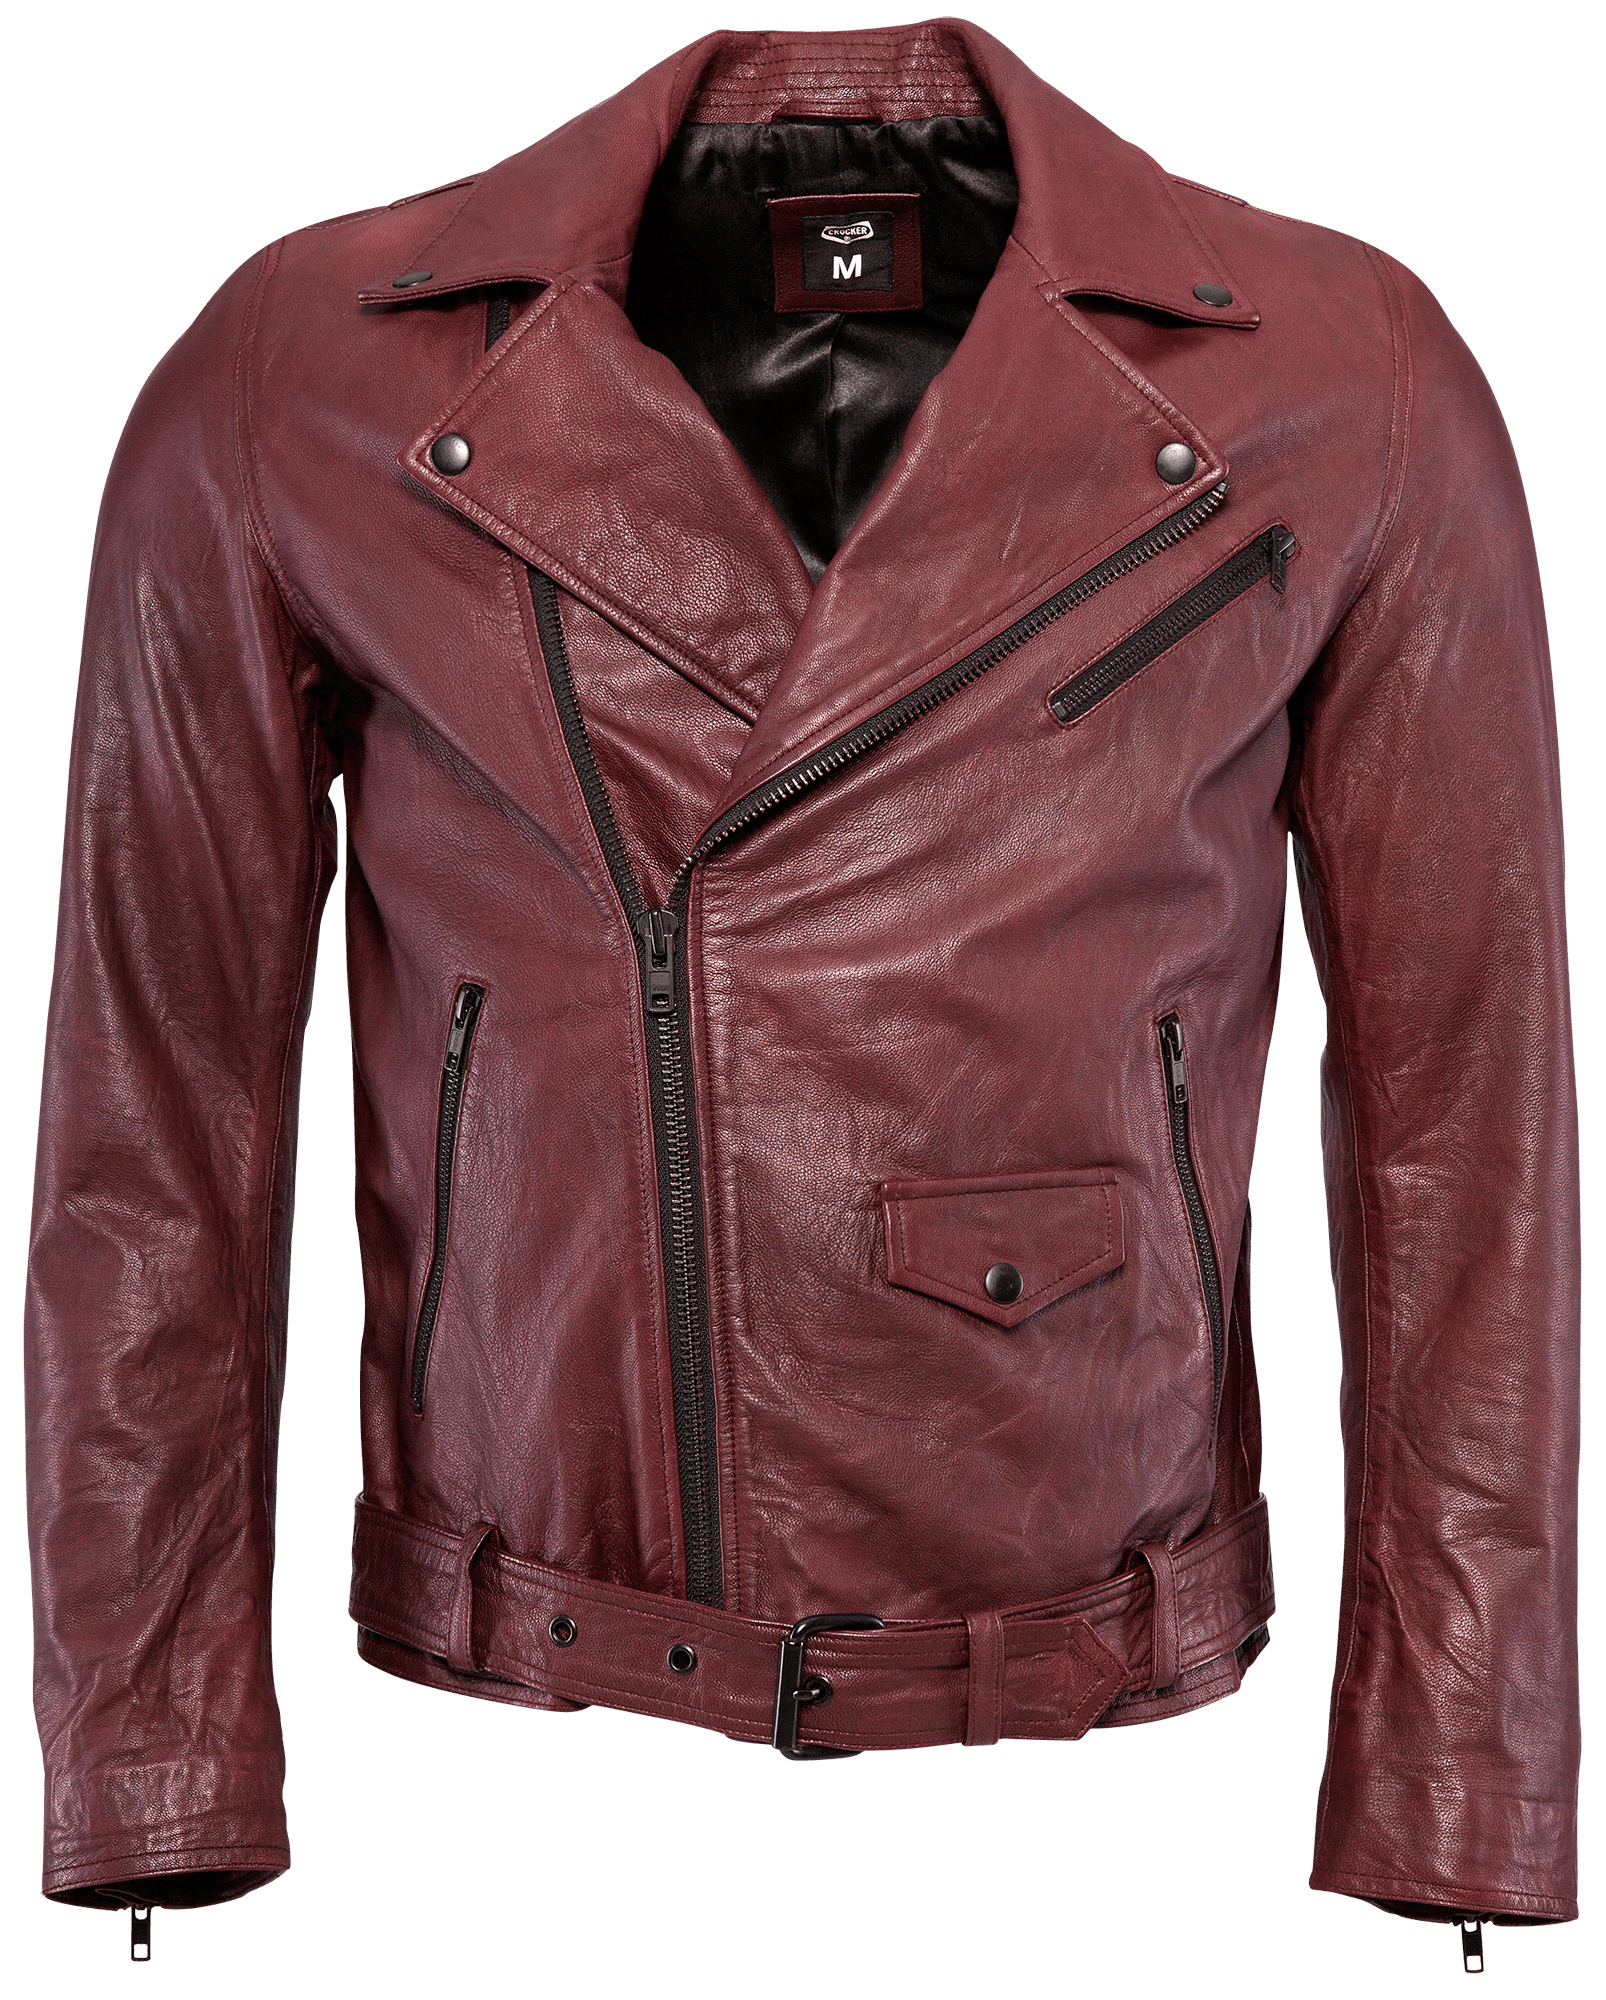 Leather Jacket Png Image PNG Image